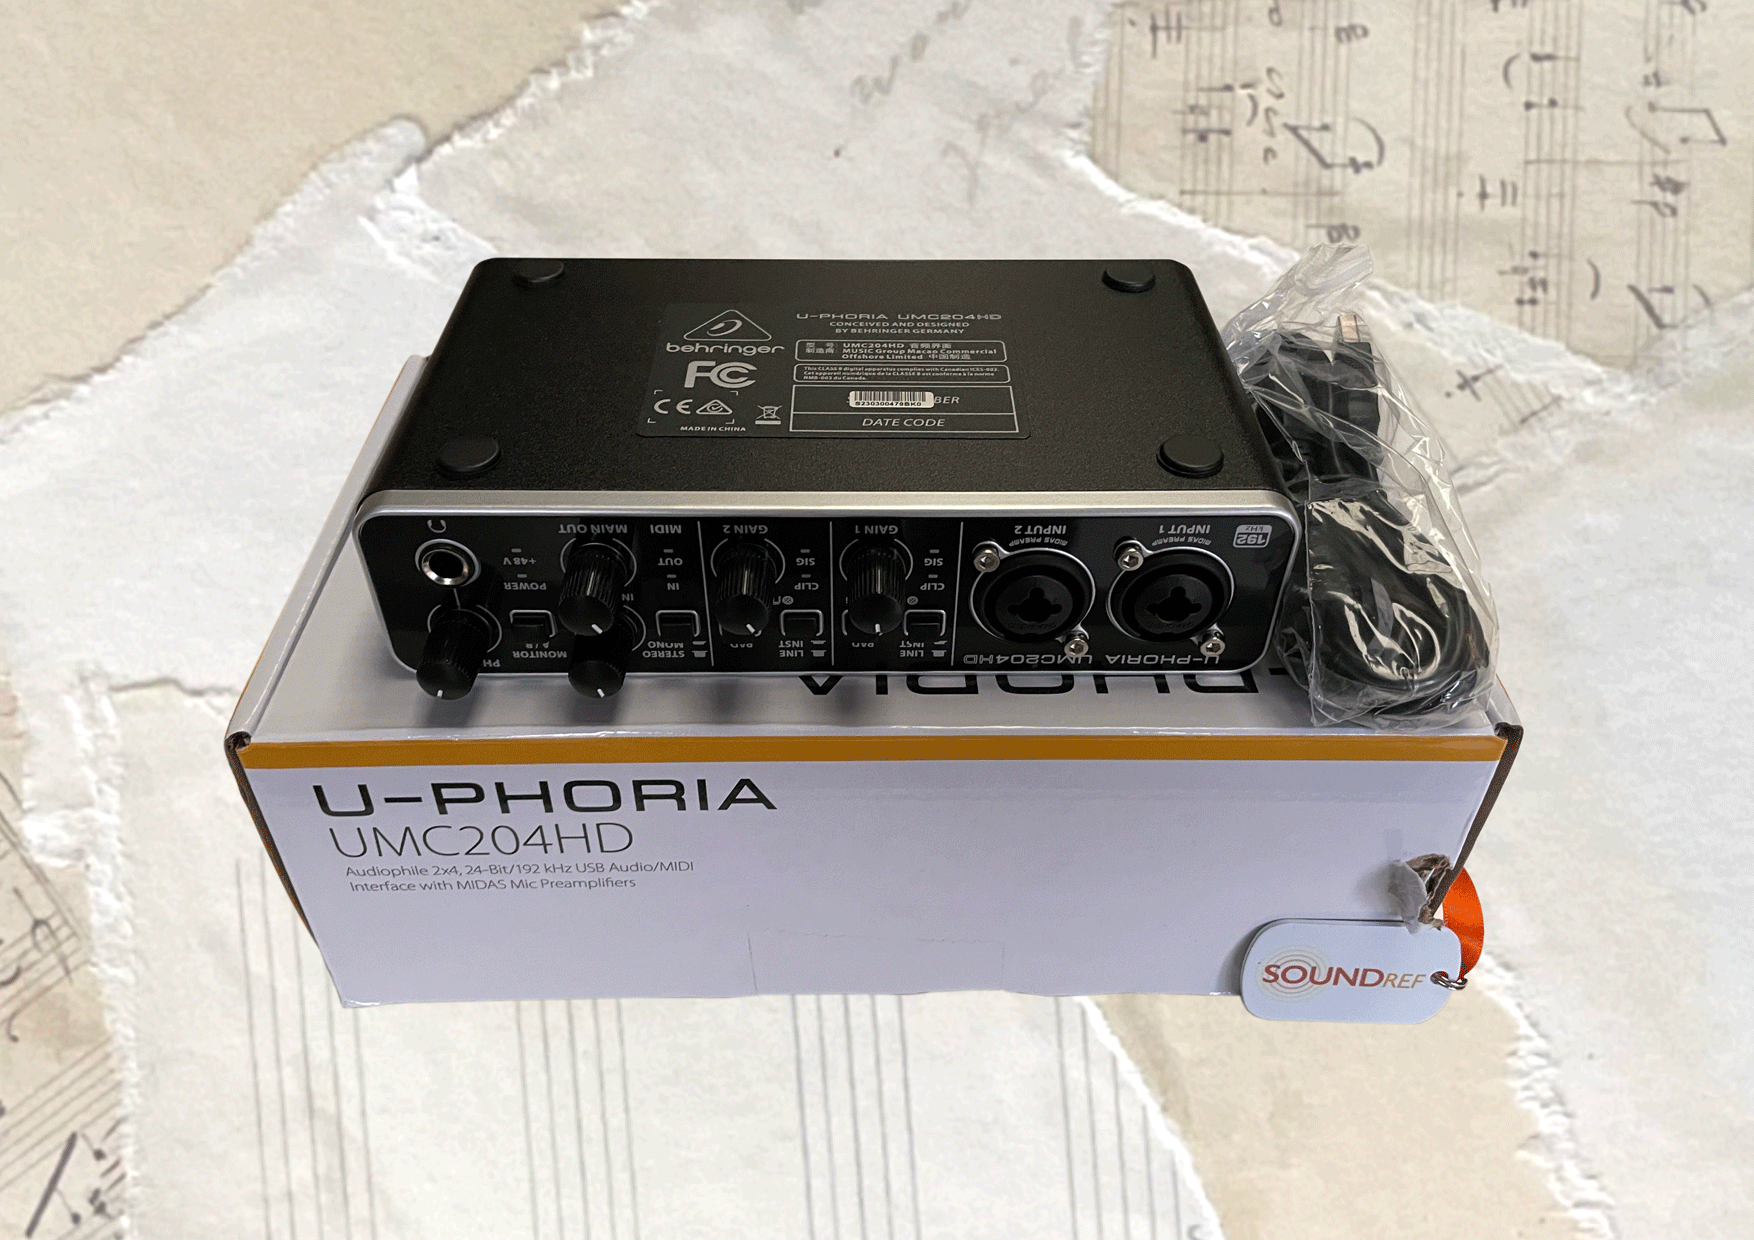 Behringer U-Phoria UMC 204HD - contents of the box